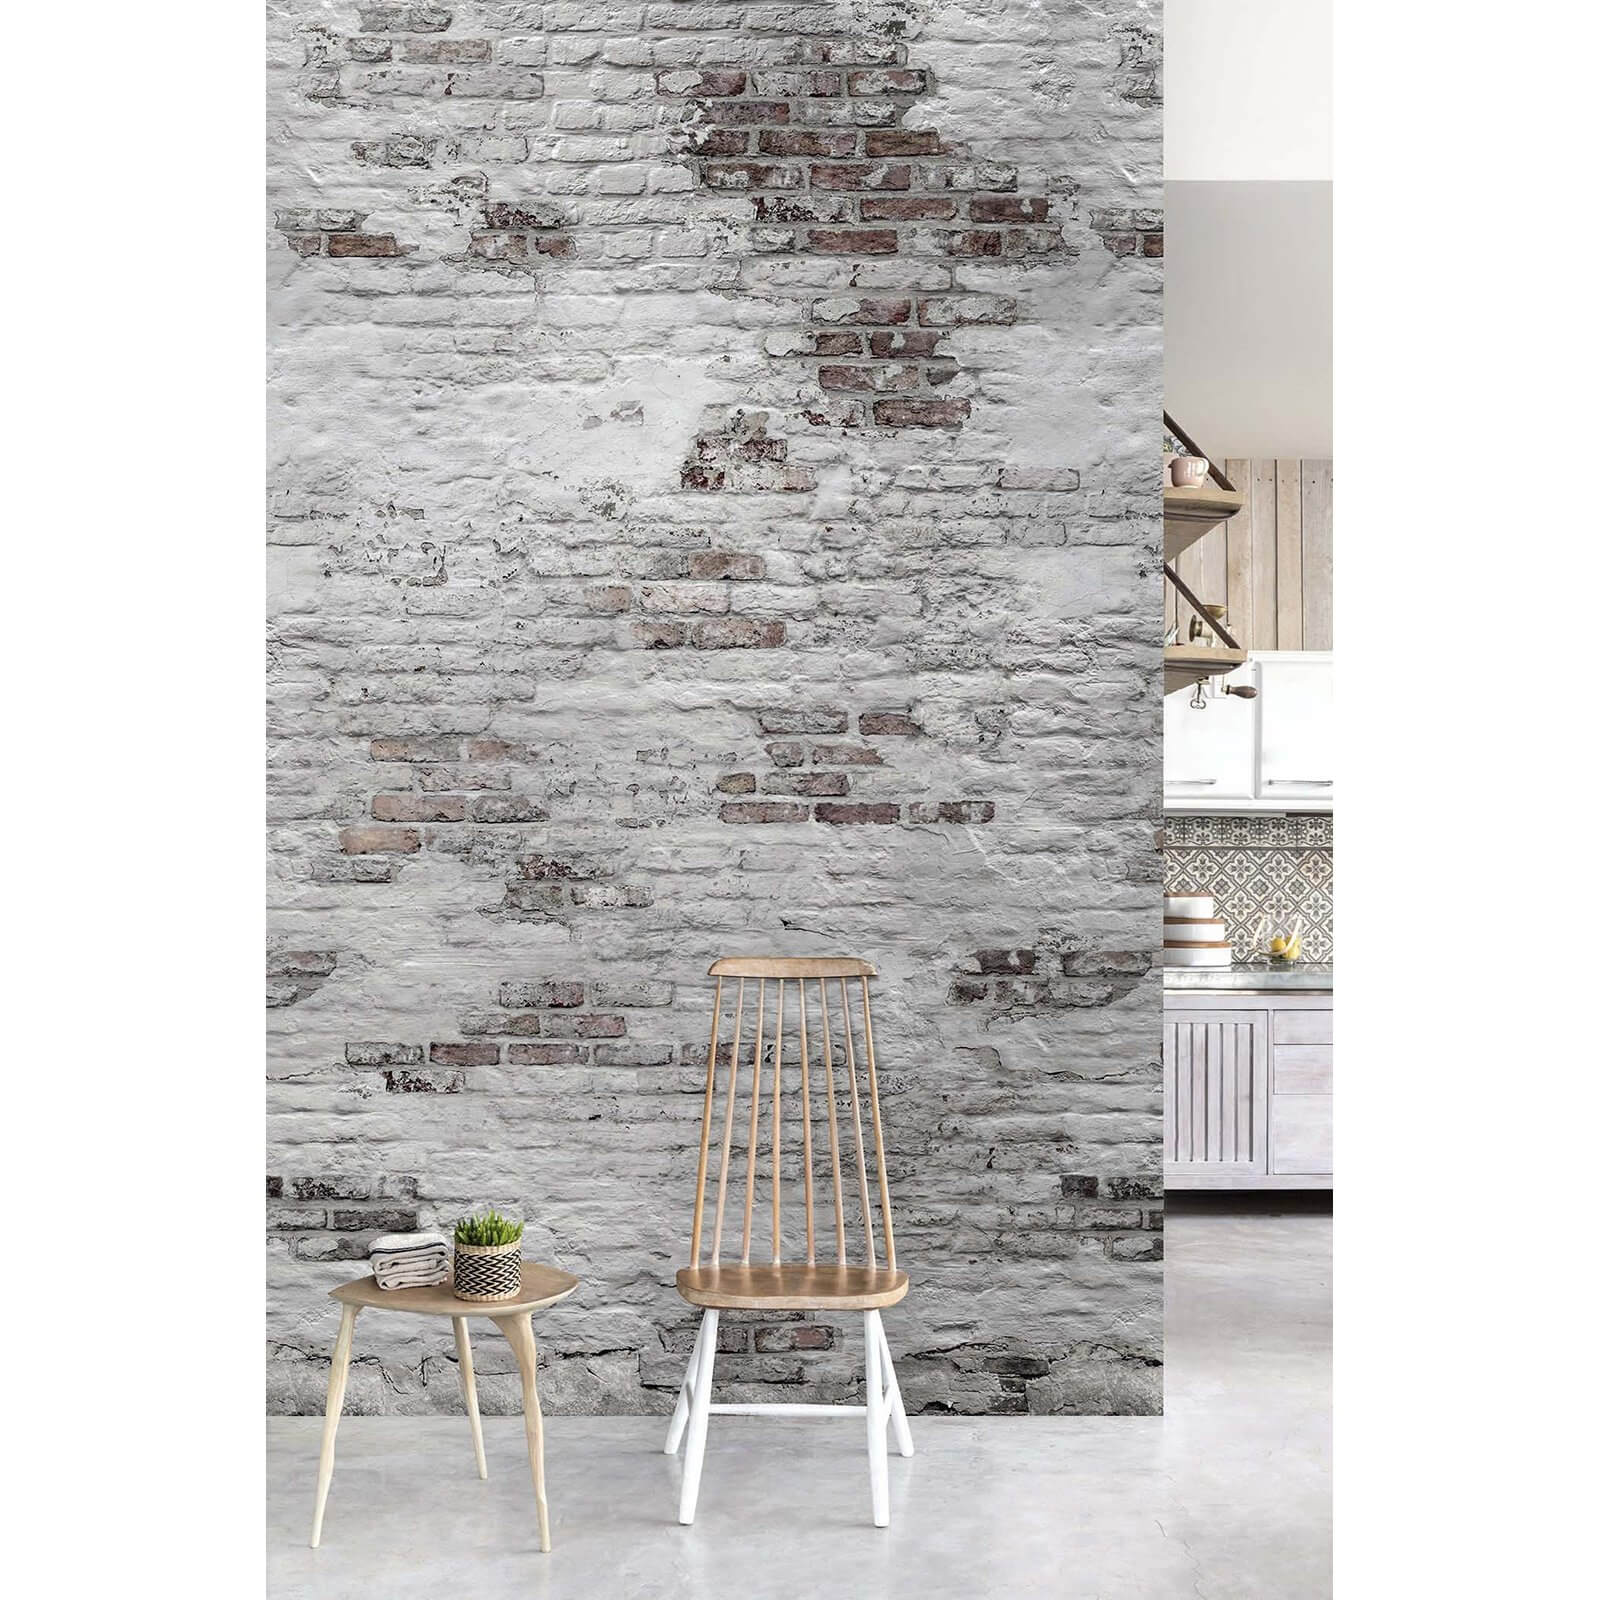 Grandeco Bricks Mid Grey Digital Wallpaper Mural